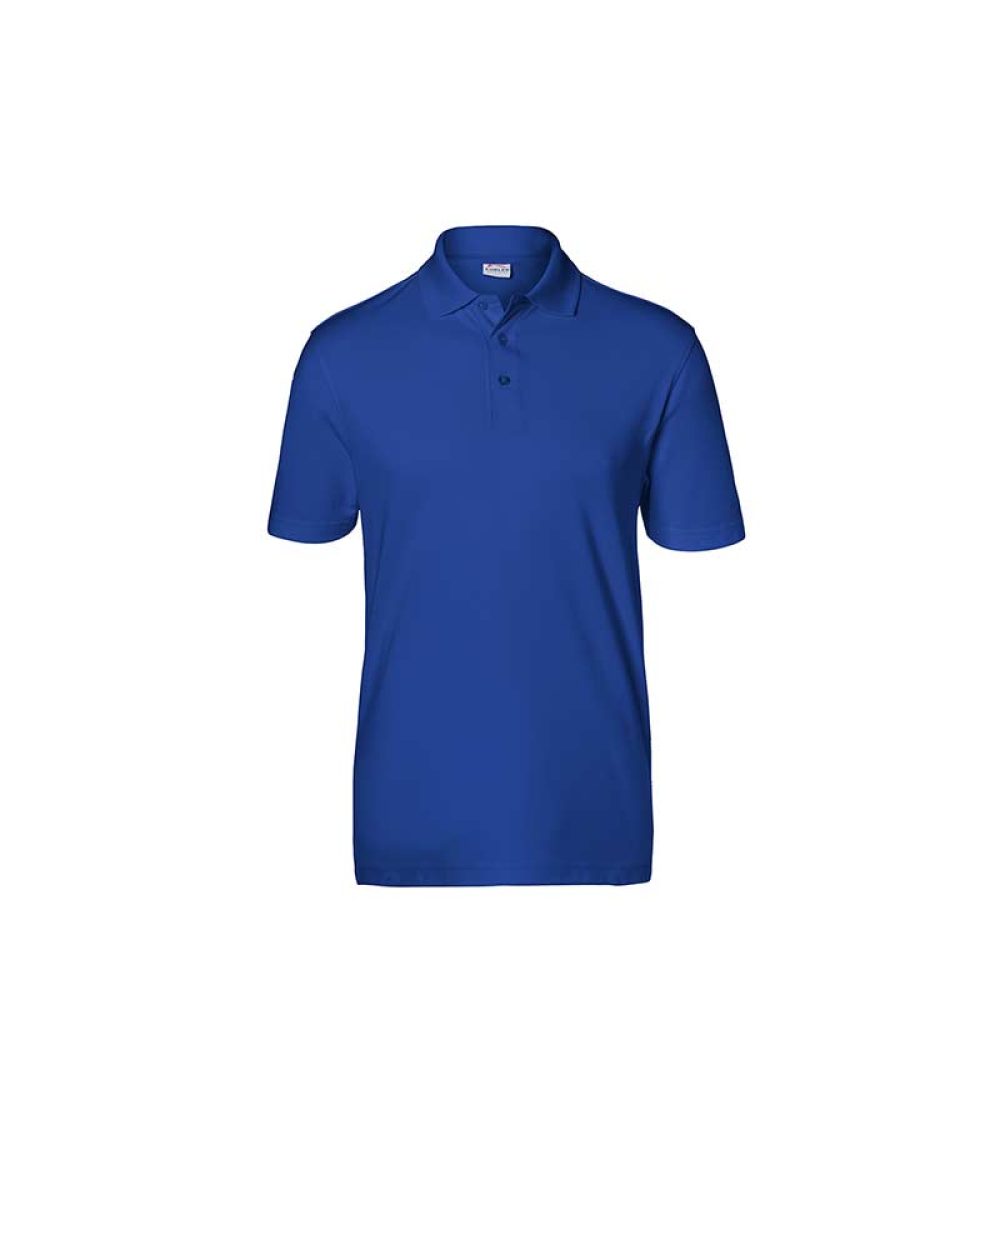 Mascot Polo XL kornblau/schwarz Polo-Hemd Shirt Bottrop Gr 